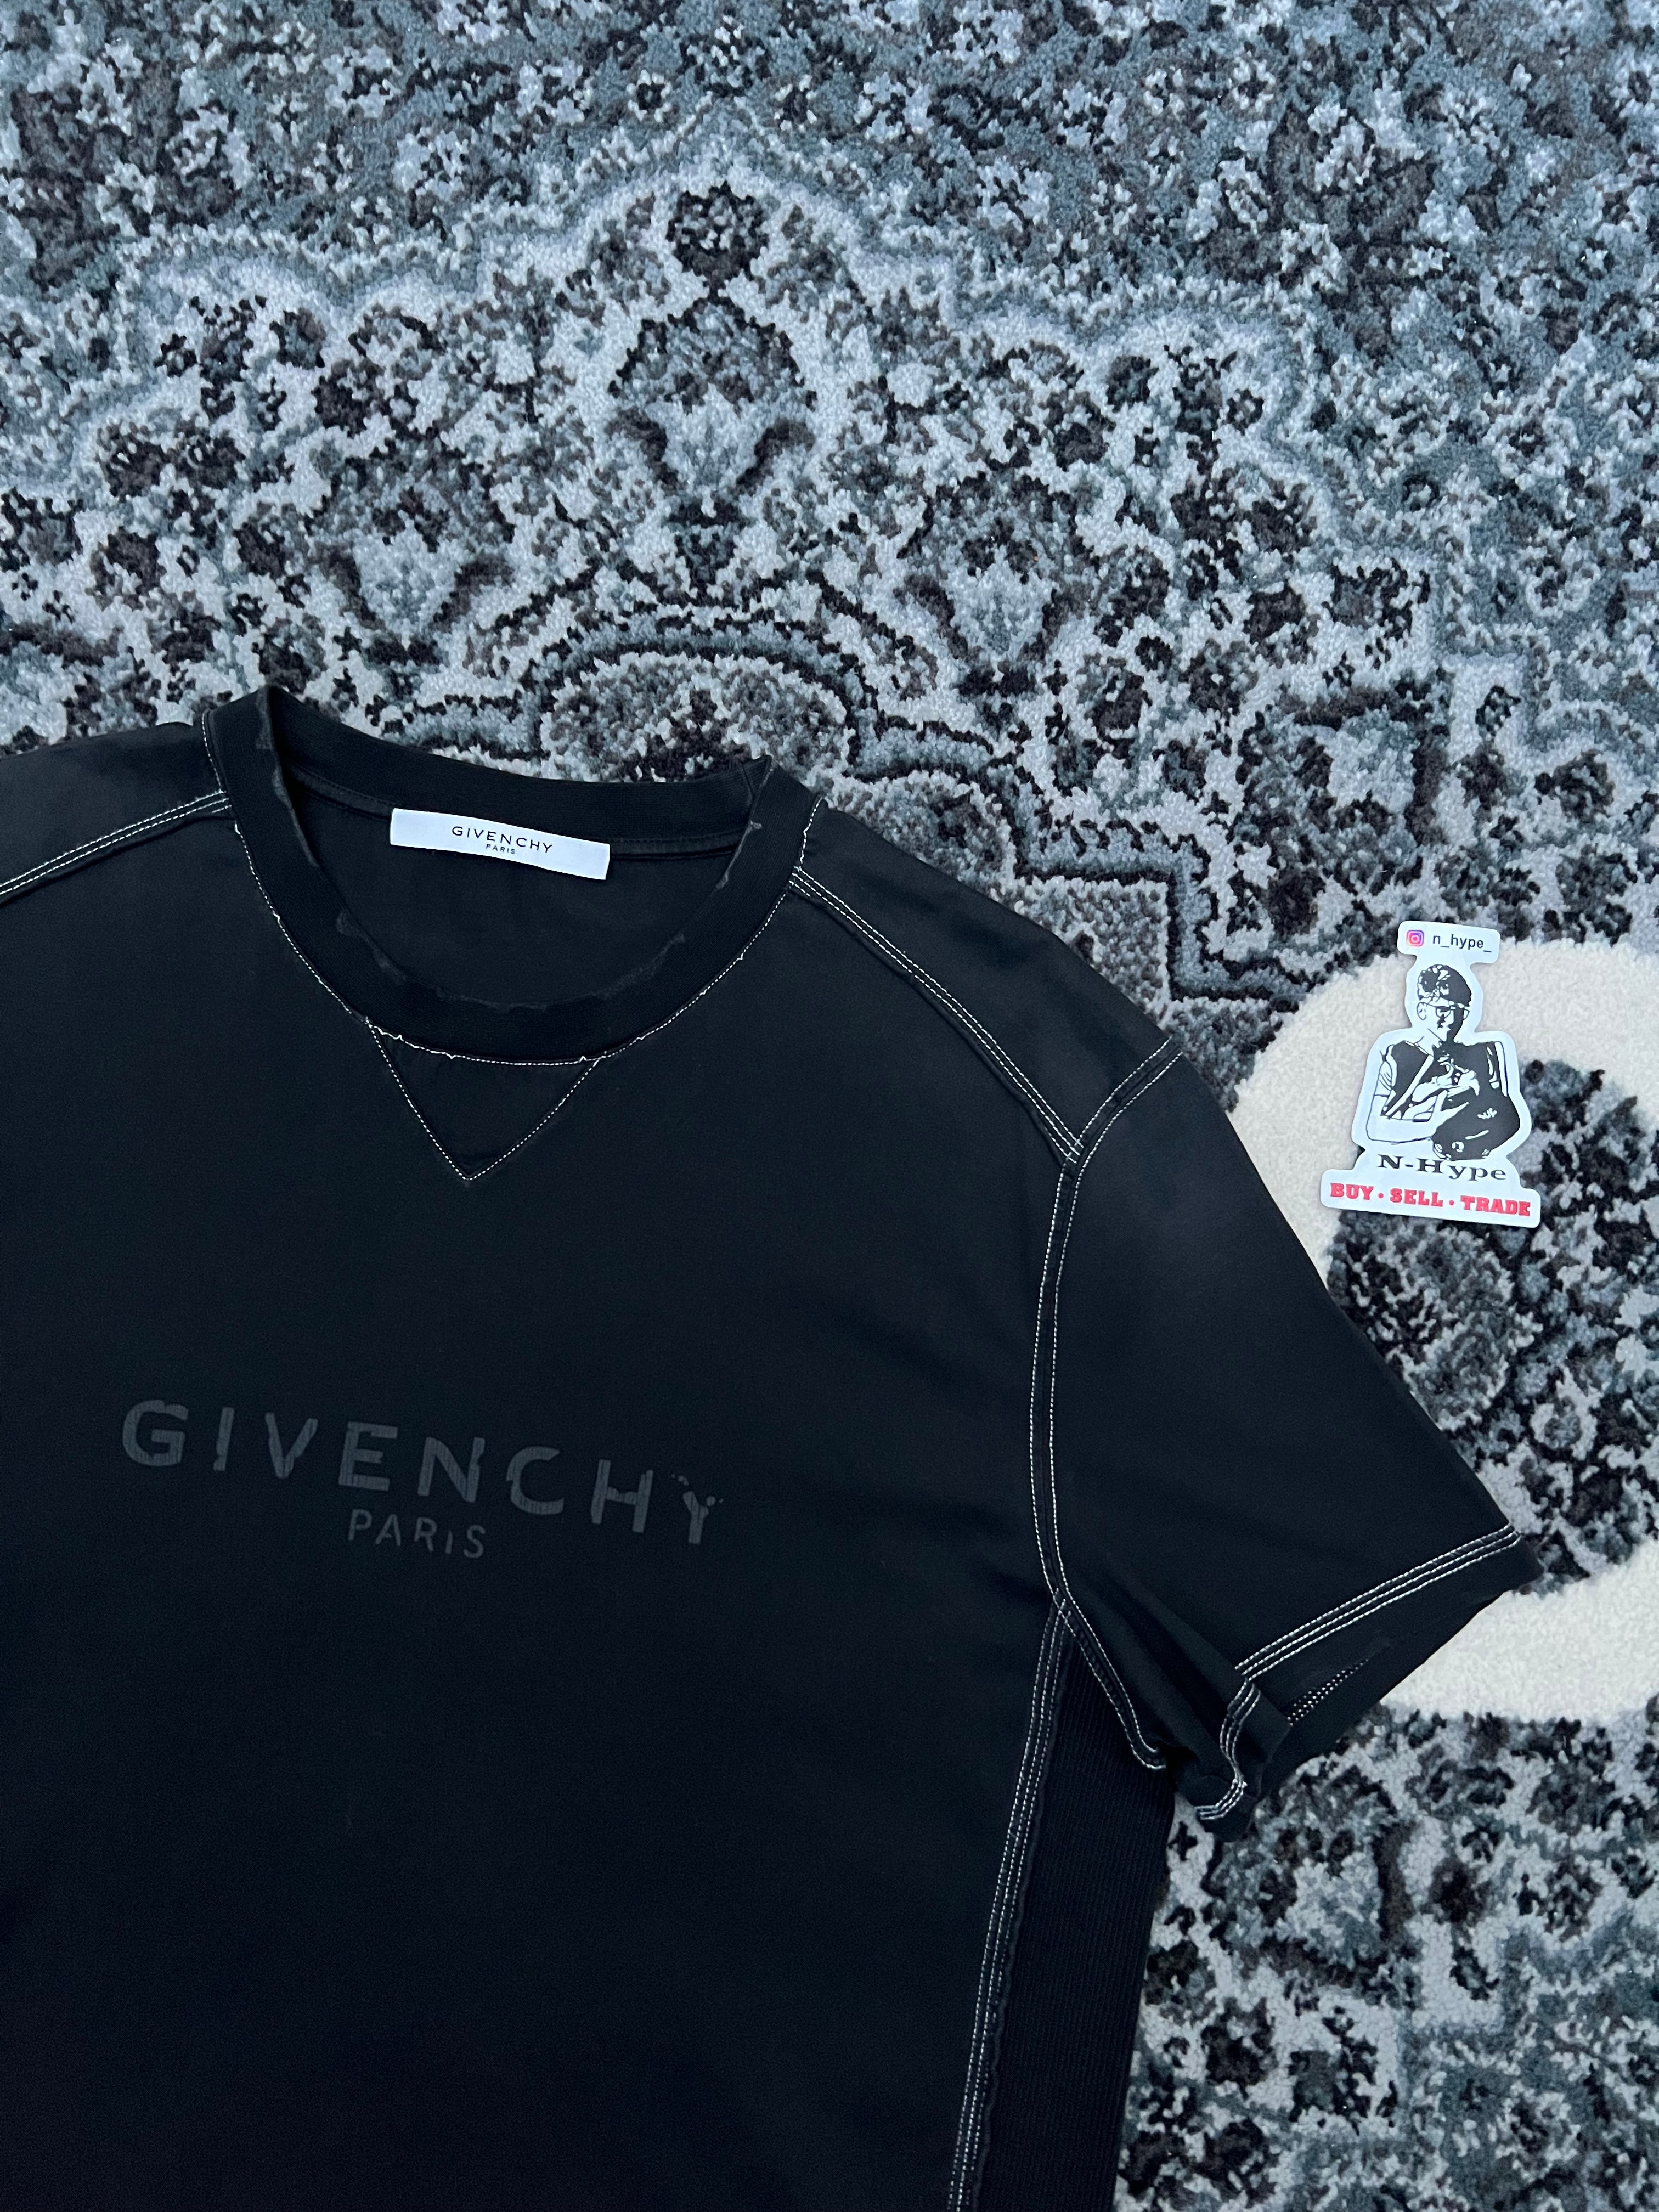 Givenchy Paris Black Tee Showroom Nhype Lodz Polska 2